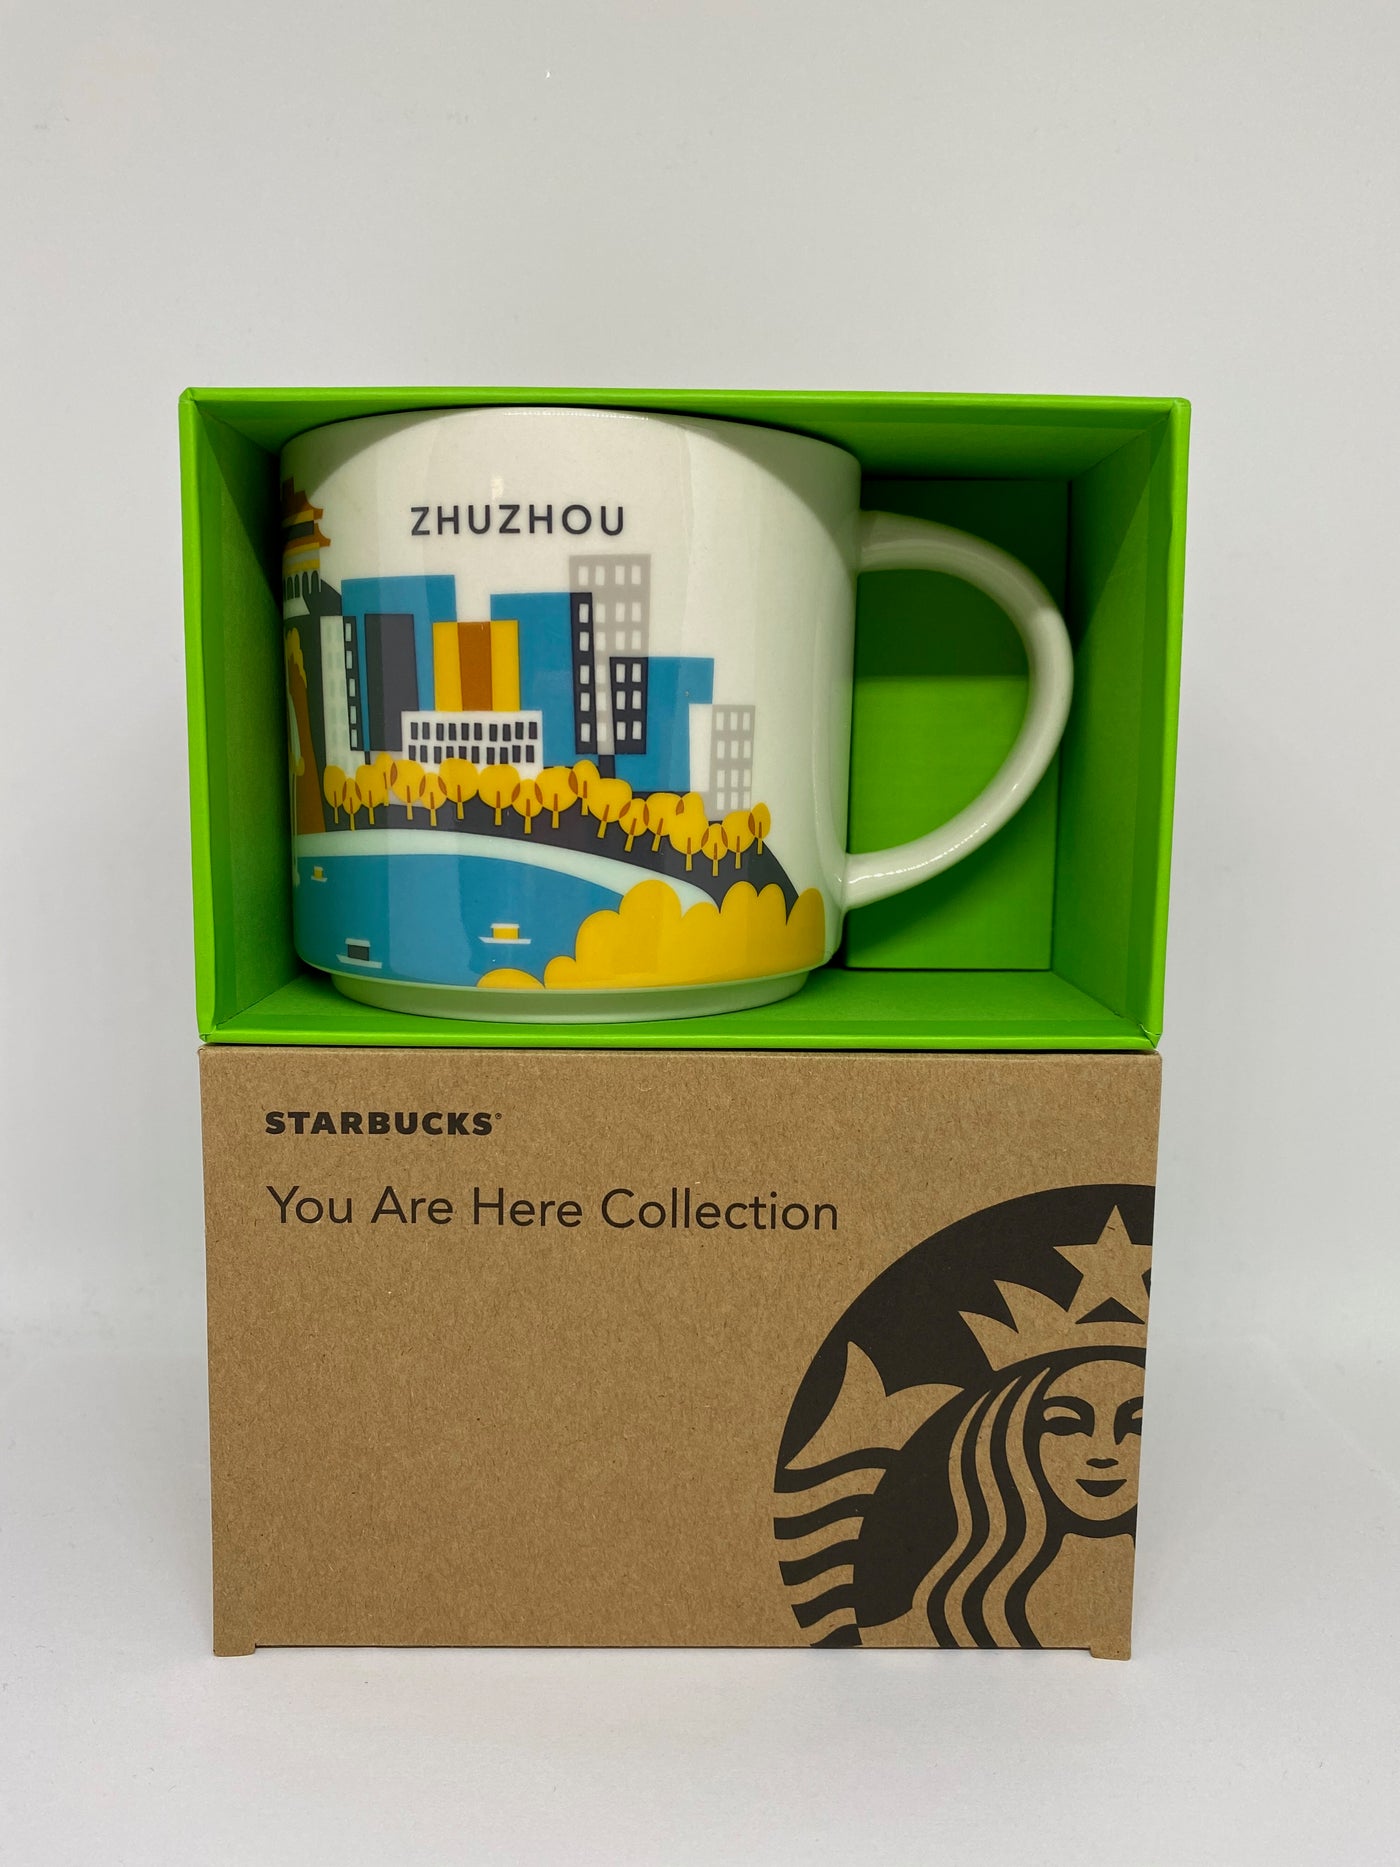 Starbucks You Are Here Collection Zhuzhou China Ceramic Coffee Mug New With Box